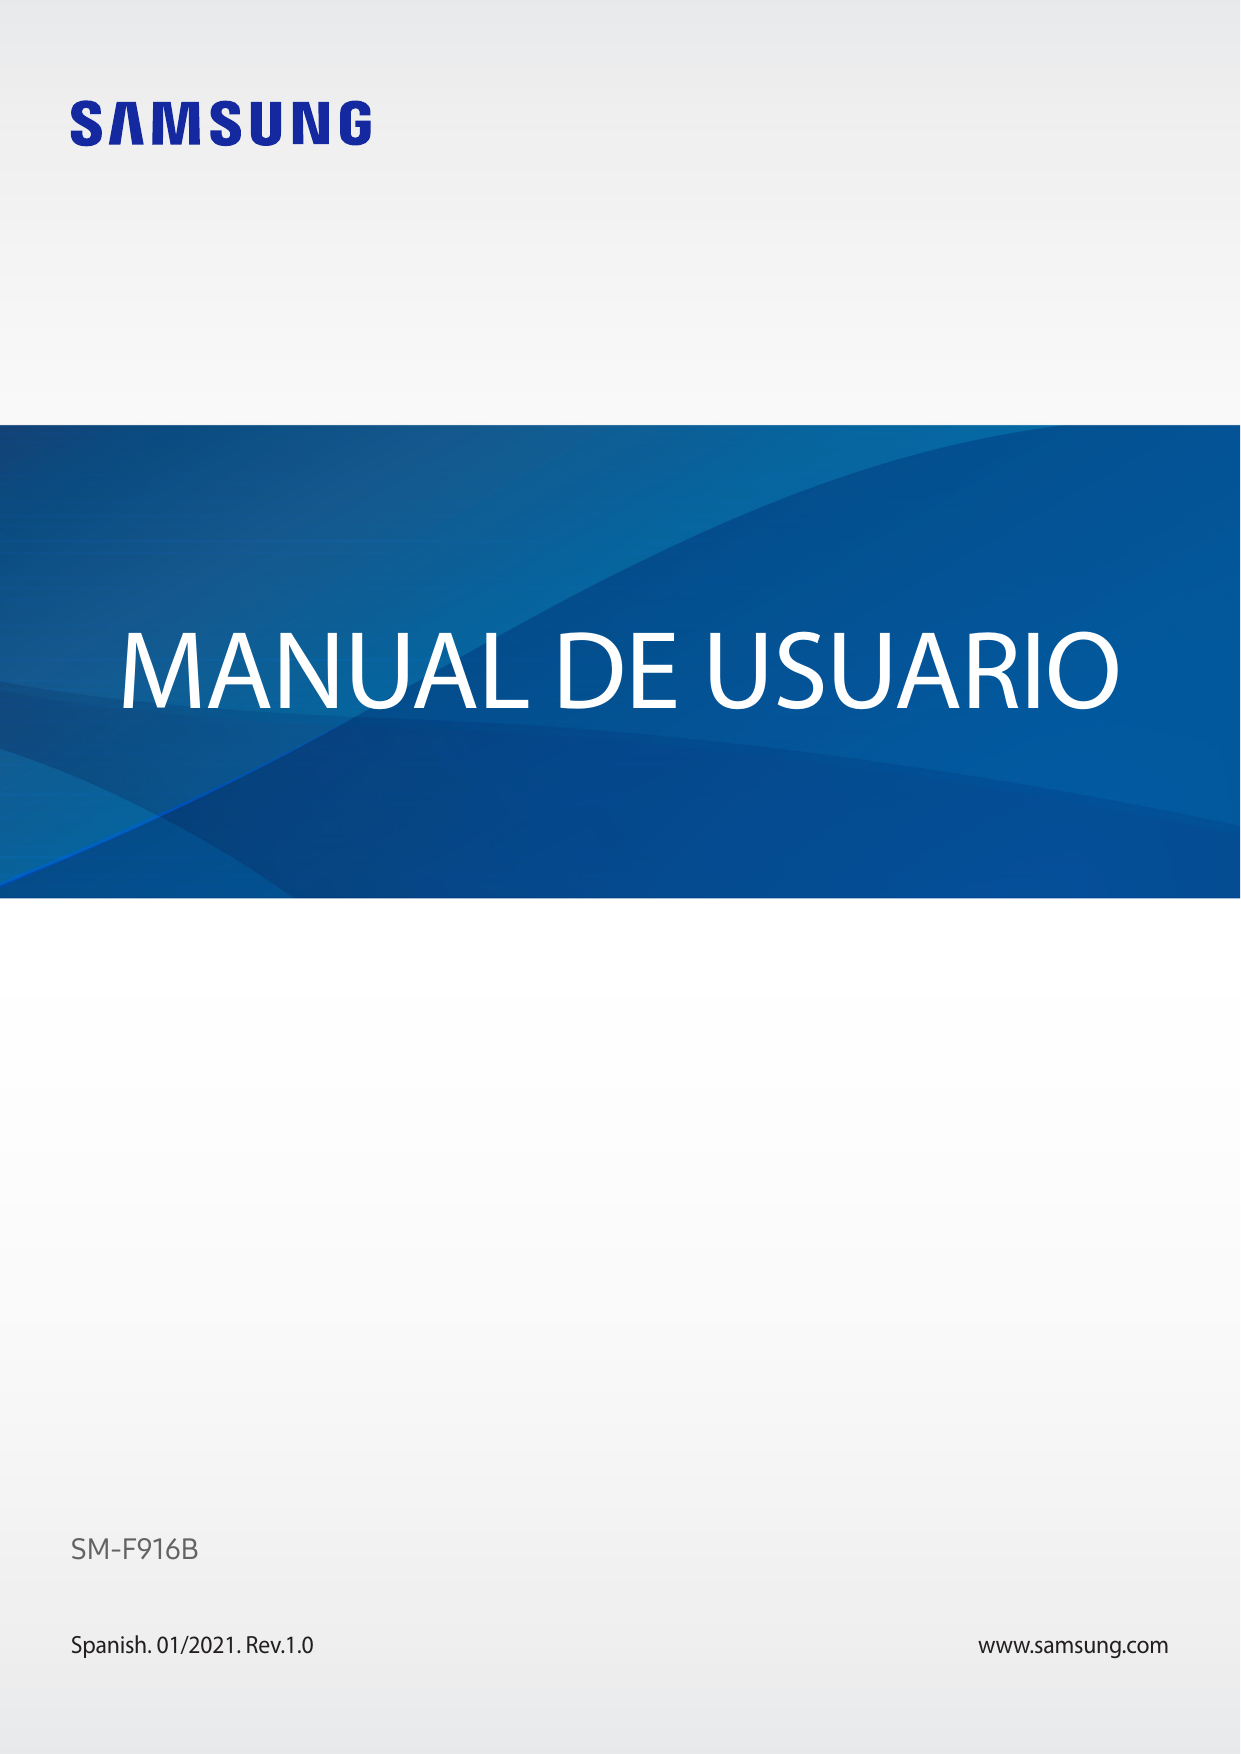 MANUAL DE USUARIOSM-F916BSpanish. 01/2021. Rev.1.0www.samsung.com